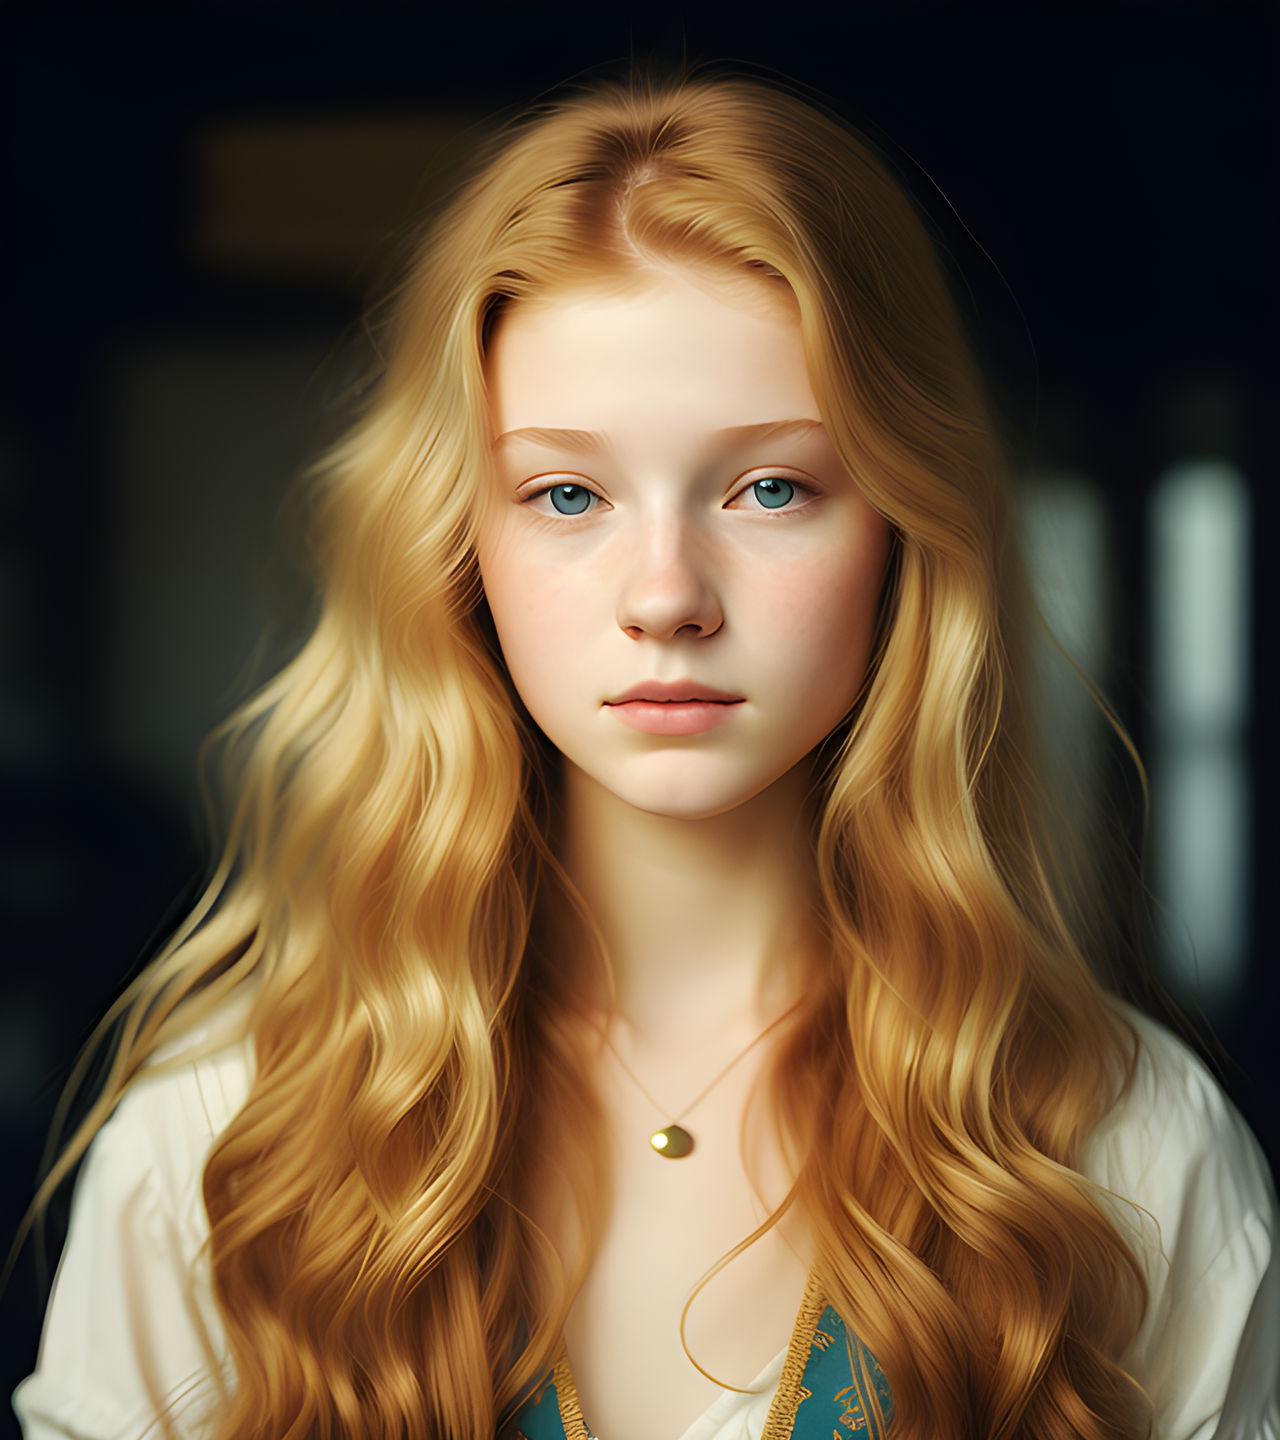 Female Portrait (15) by JER0O0 on DeviantArt